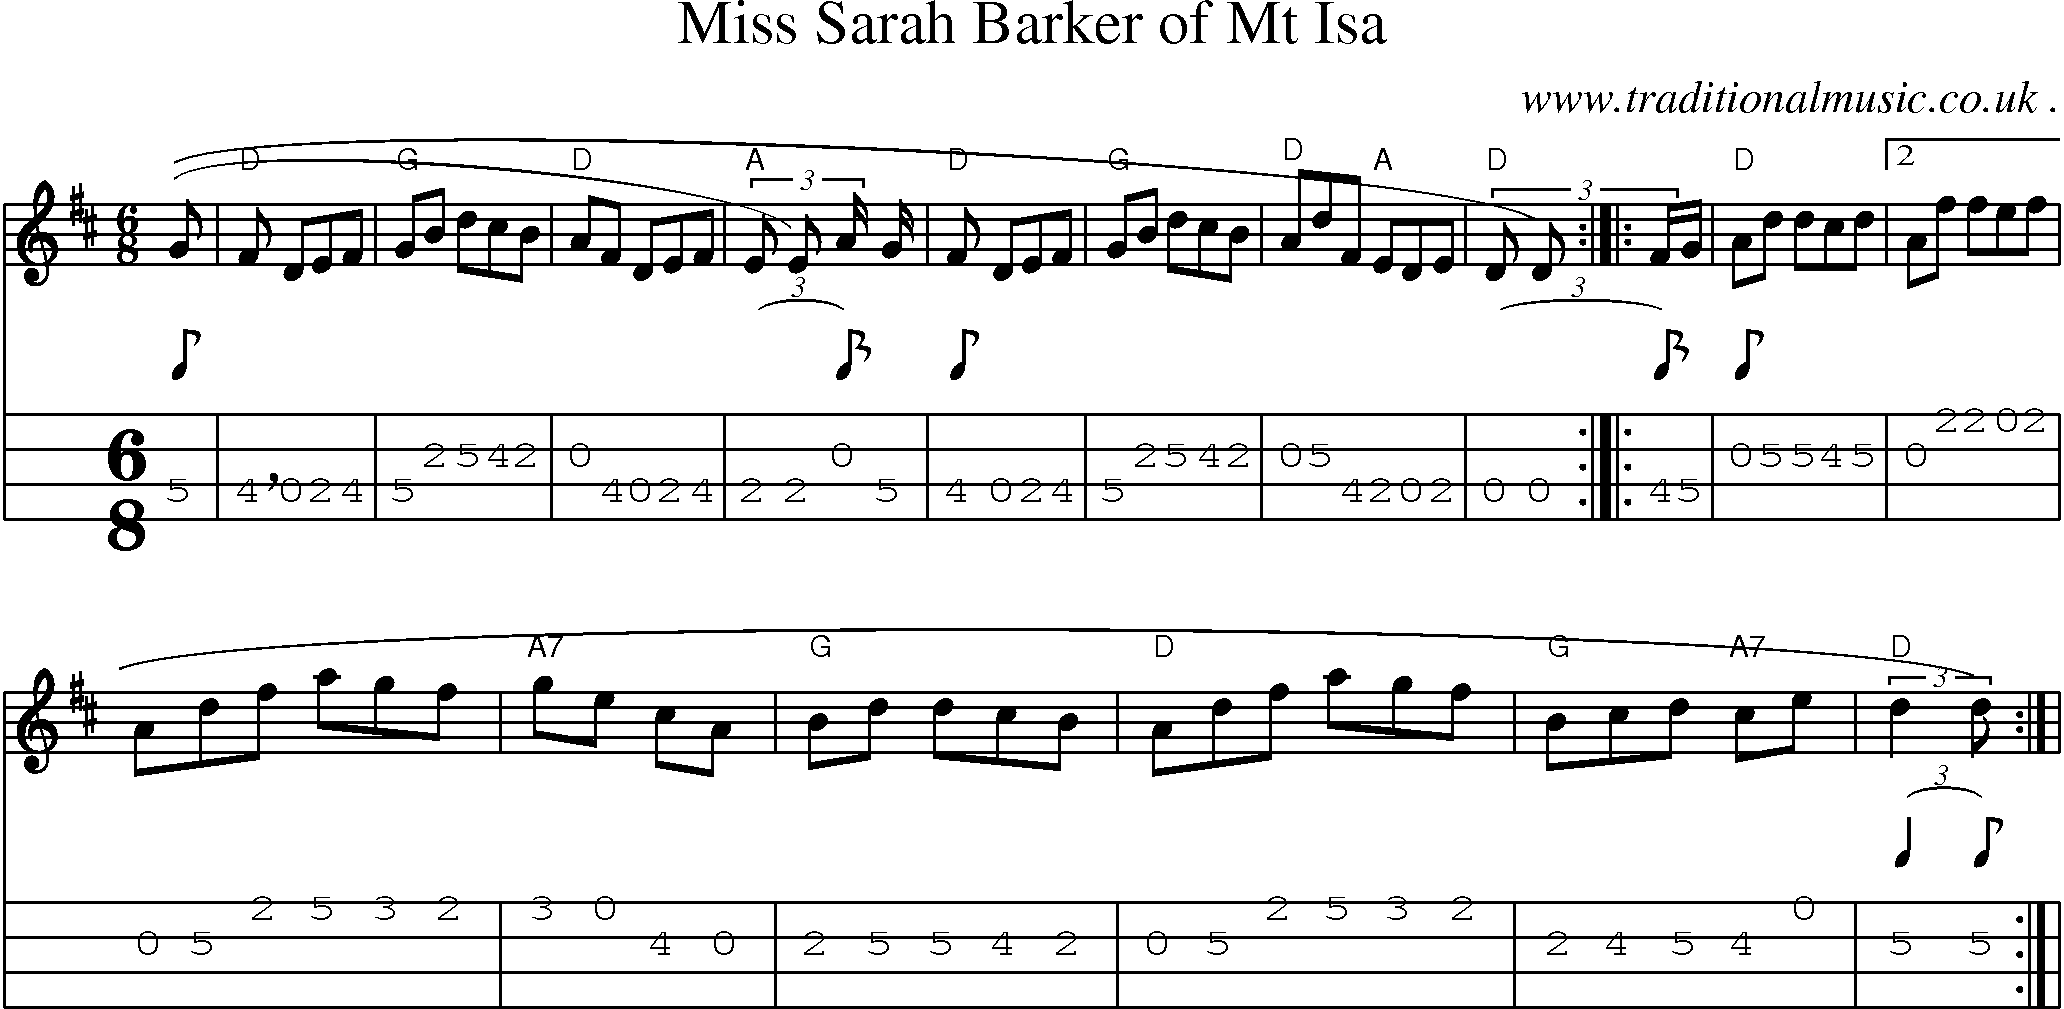 Sheet-music  score, Chords and Mandolin Tabs for Miss Sarah Barker Of Mt Isa